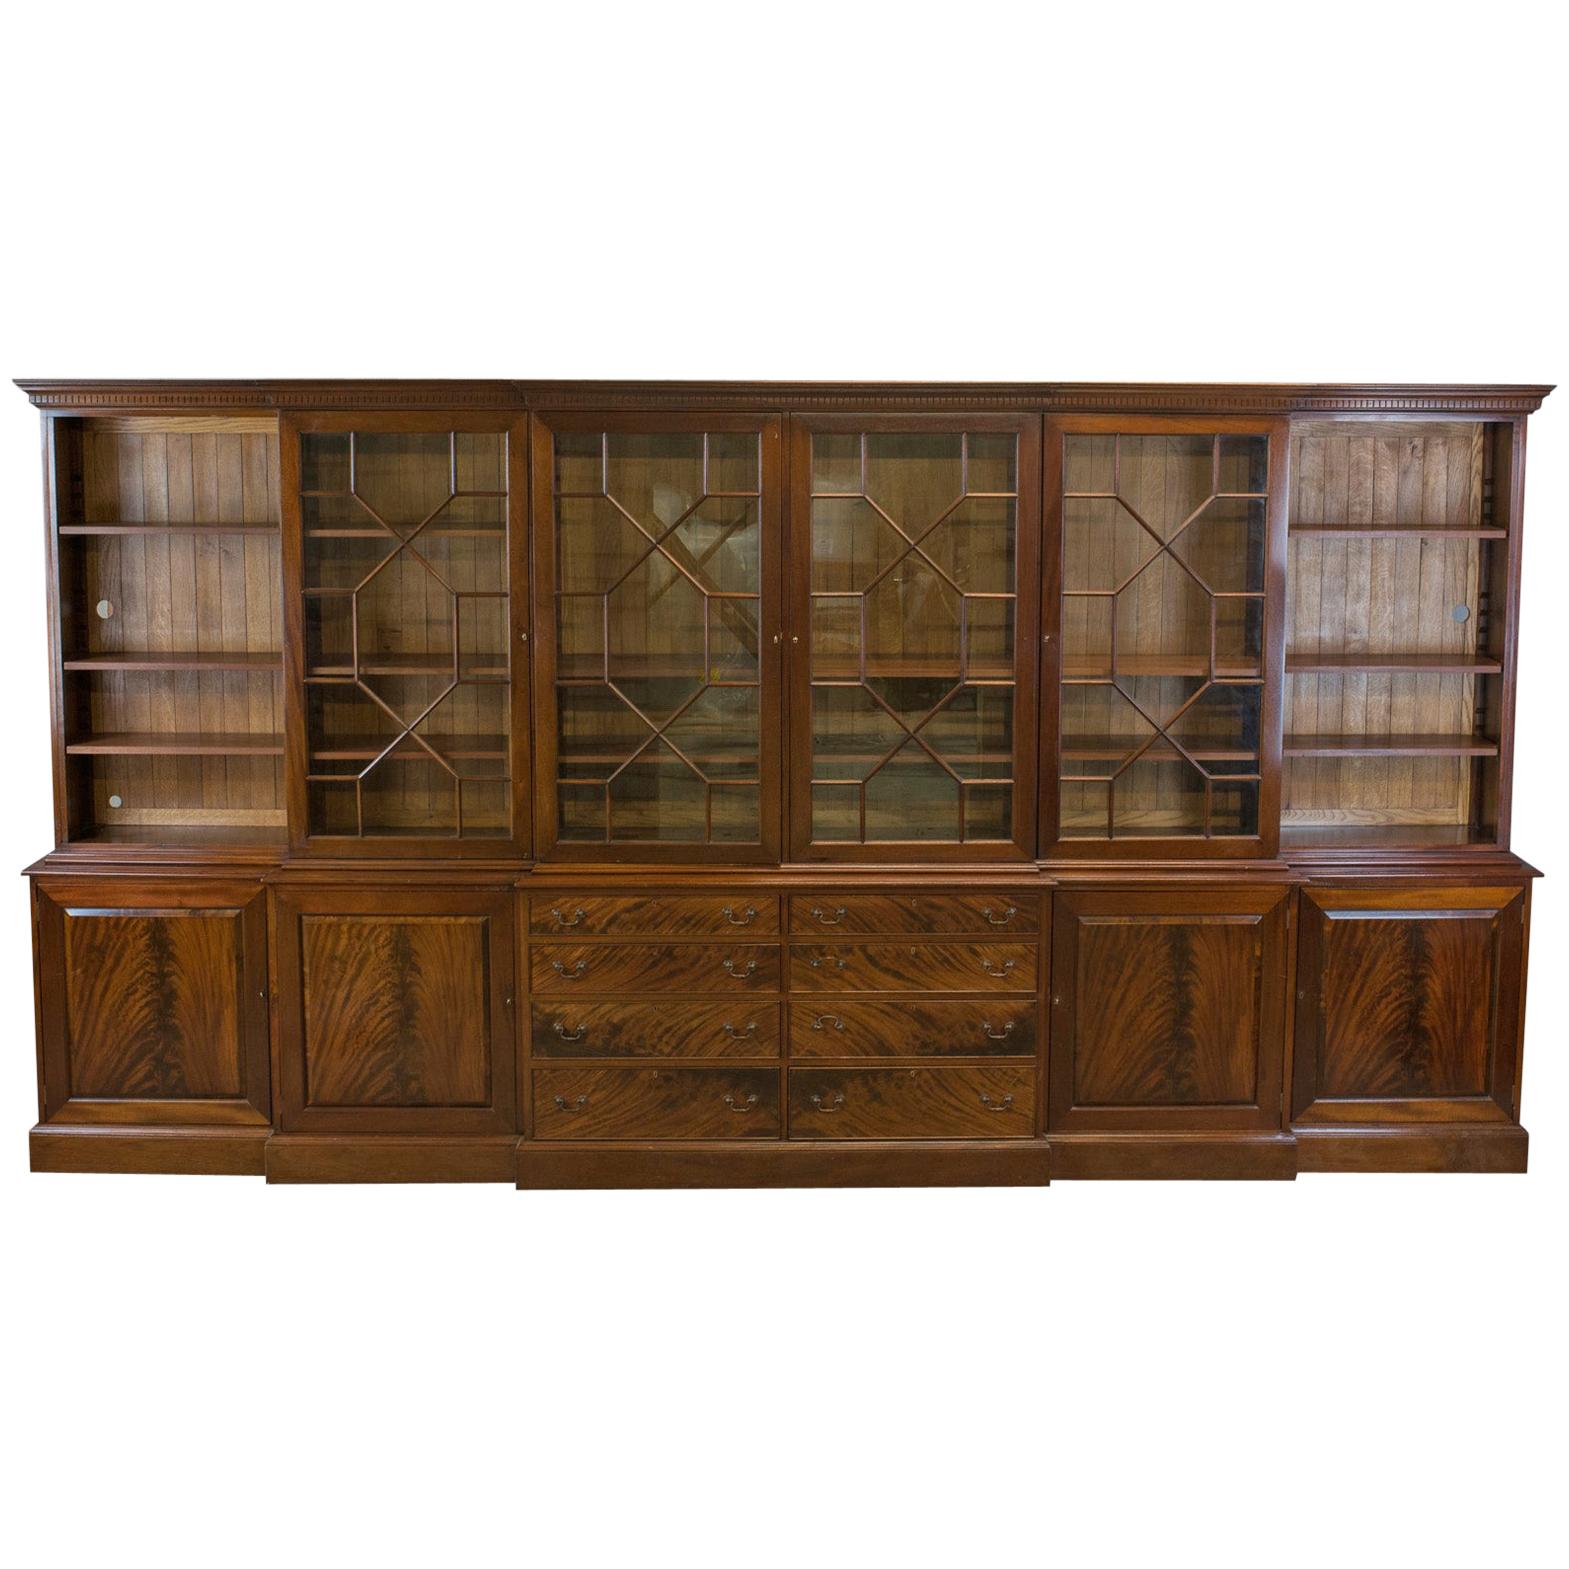 Large Breakfront Bookcase Cabinet, Mahogany, Glazed, Georgian Revival